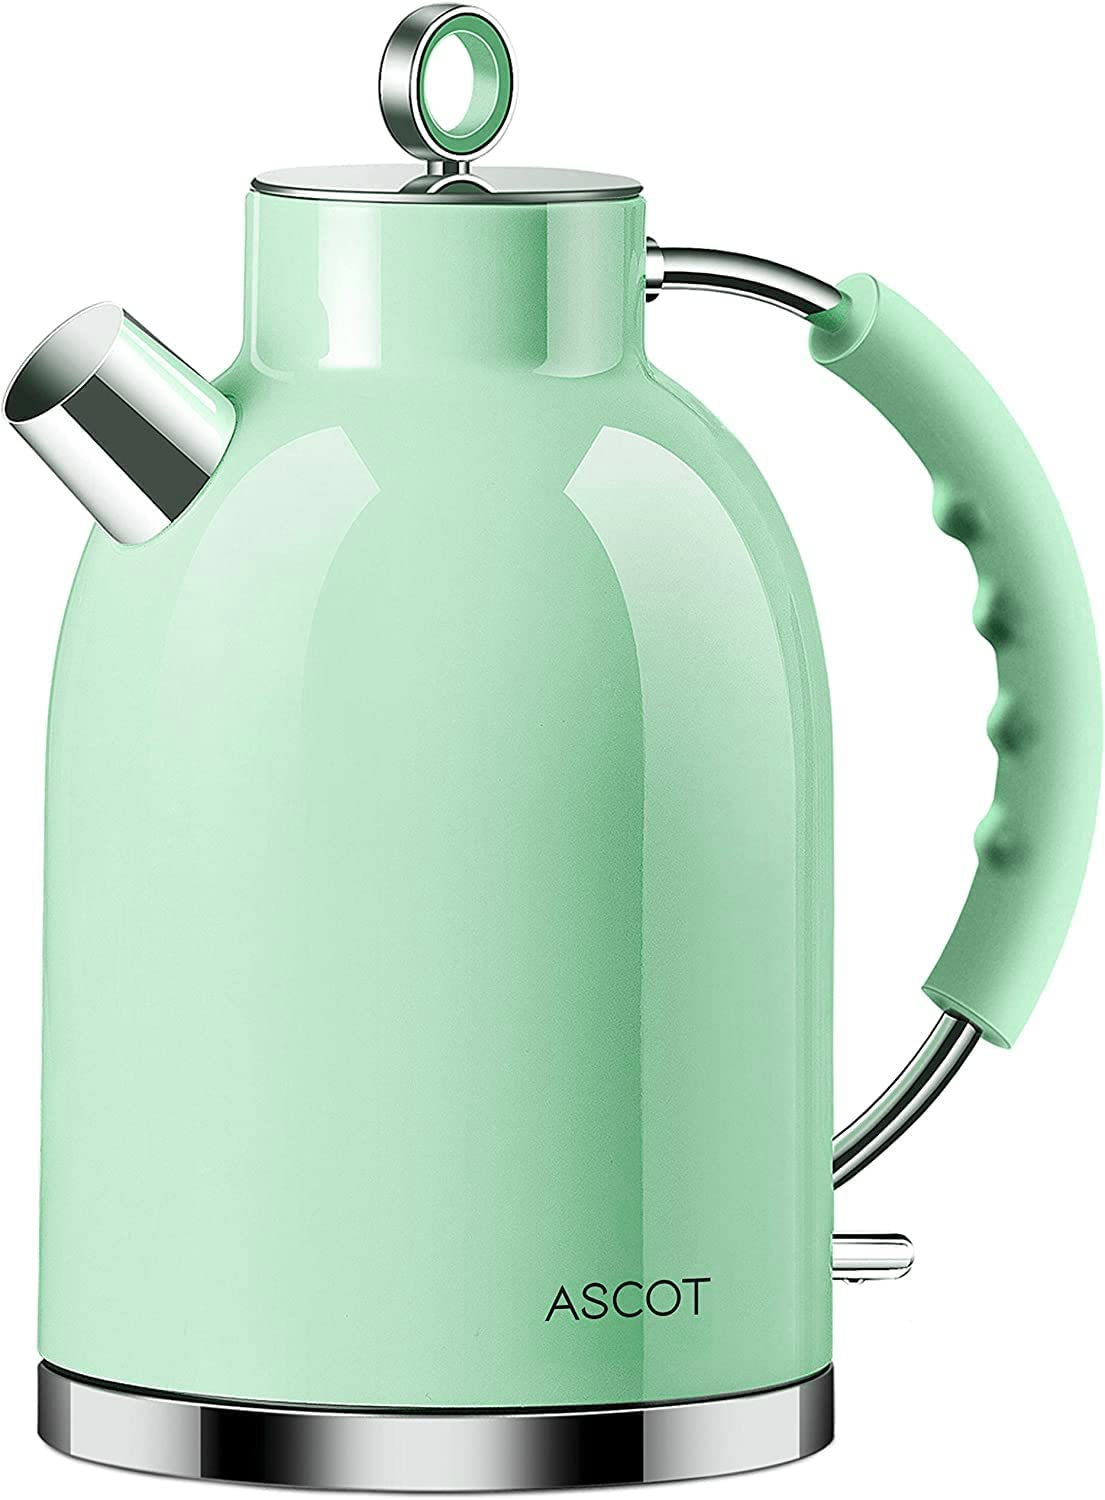 ASCOT Electric Kettle Stainless Steel Tea Kettle,1.5L(K1-Green)